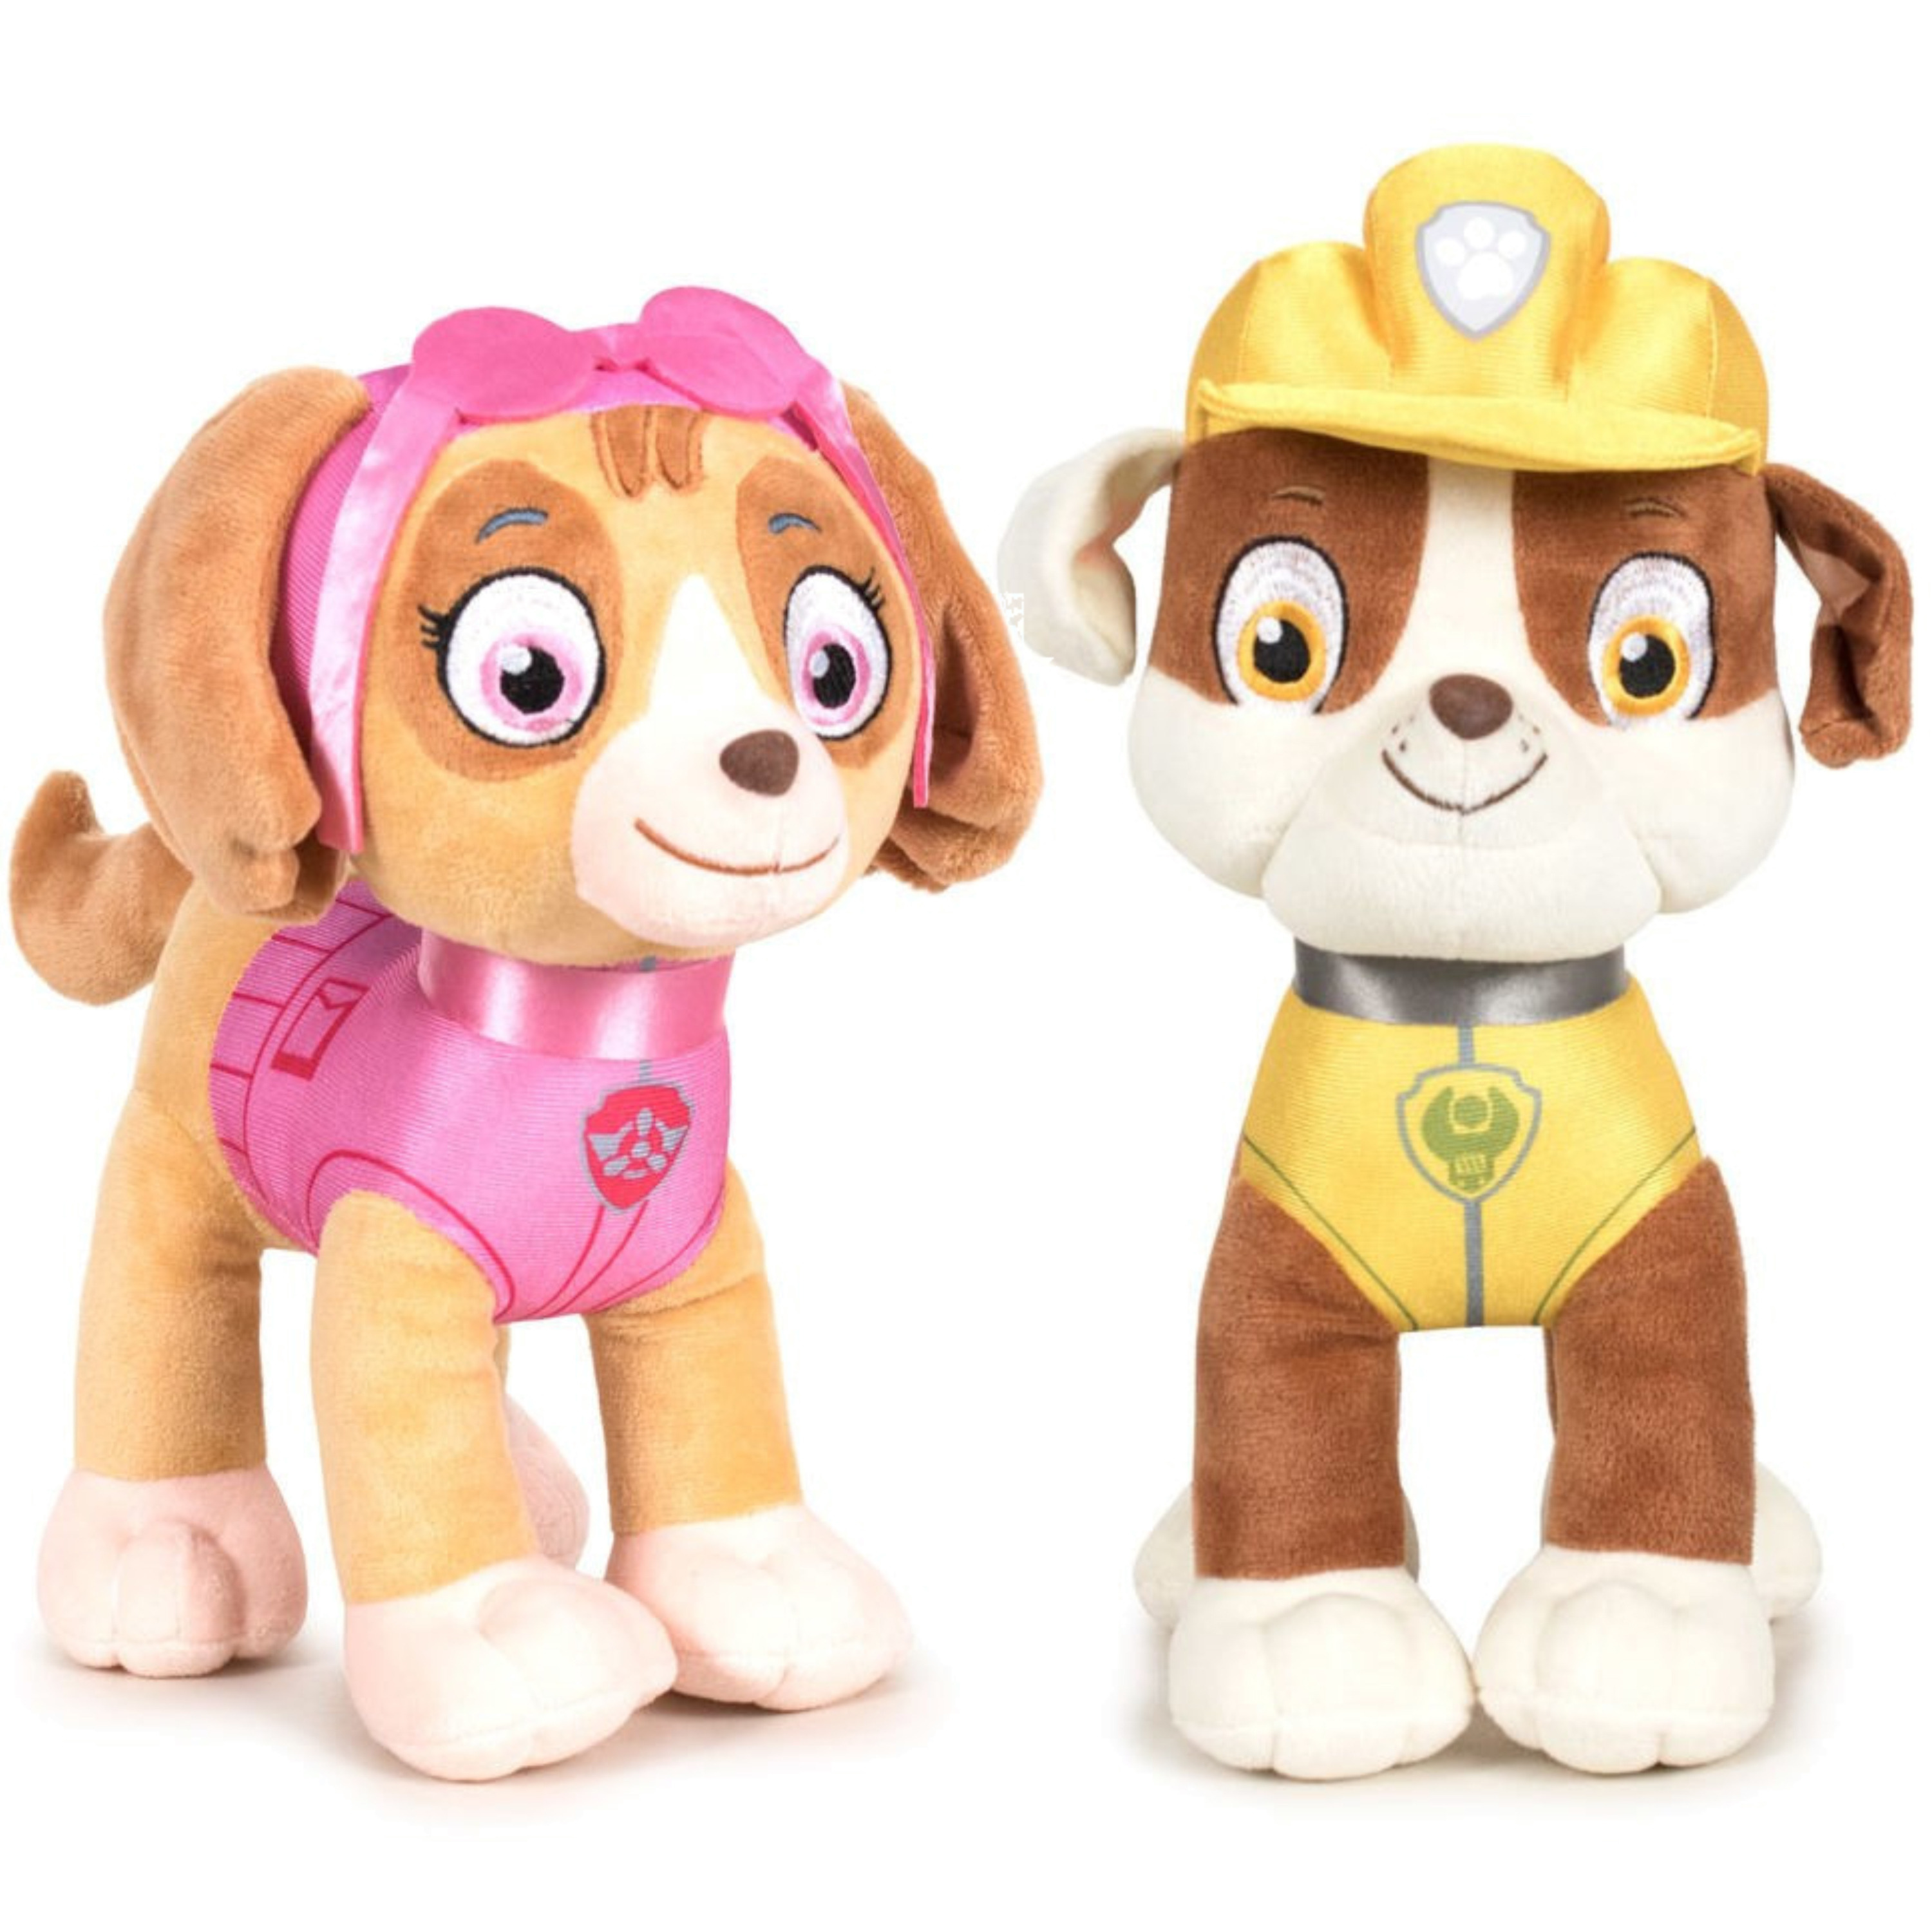 Paw Patrol figuren speelgoed knuffels set van 2x karakters Skye en Rubble 19 cm